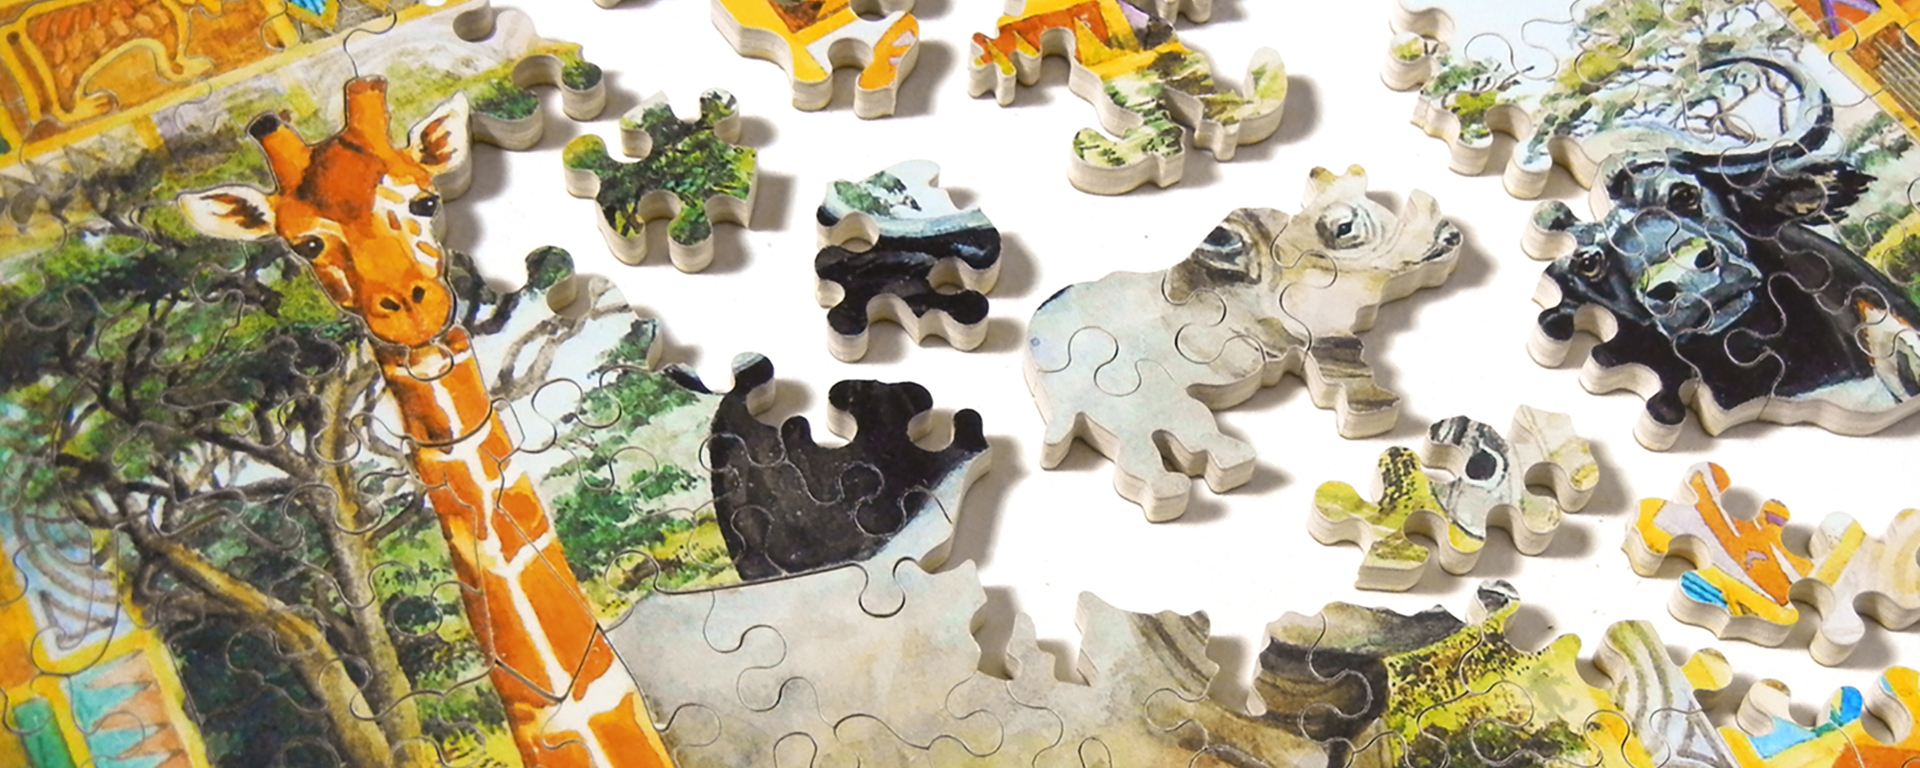 Wooden safari animal jigsaw puzzle in progress featuring a giraffe, rhino, musk ox, and other safari animals.